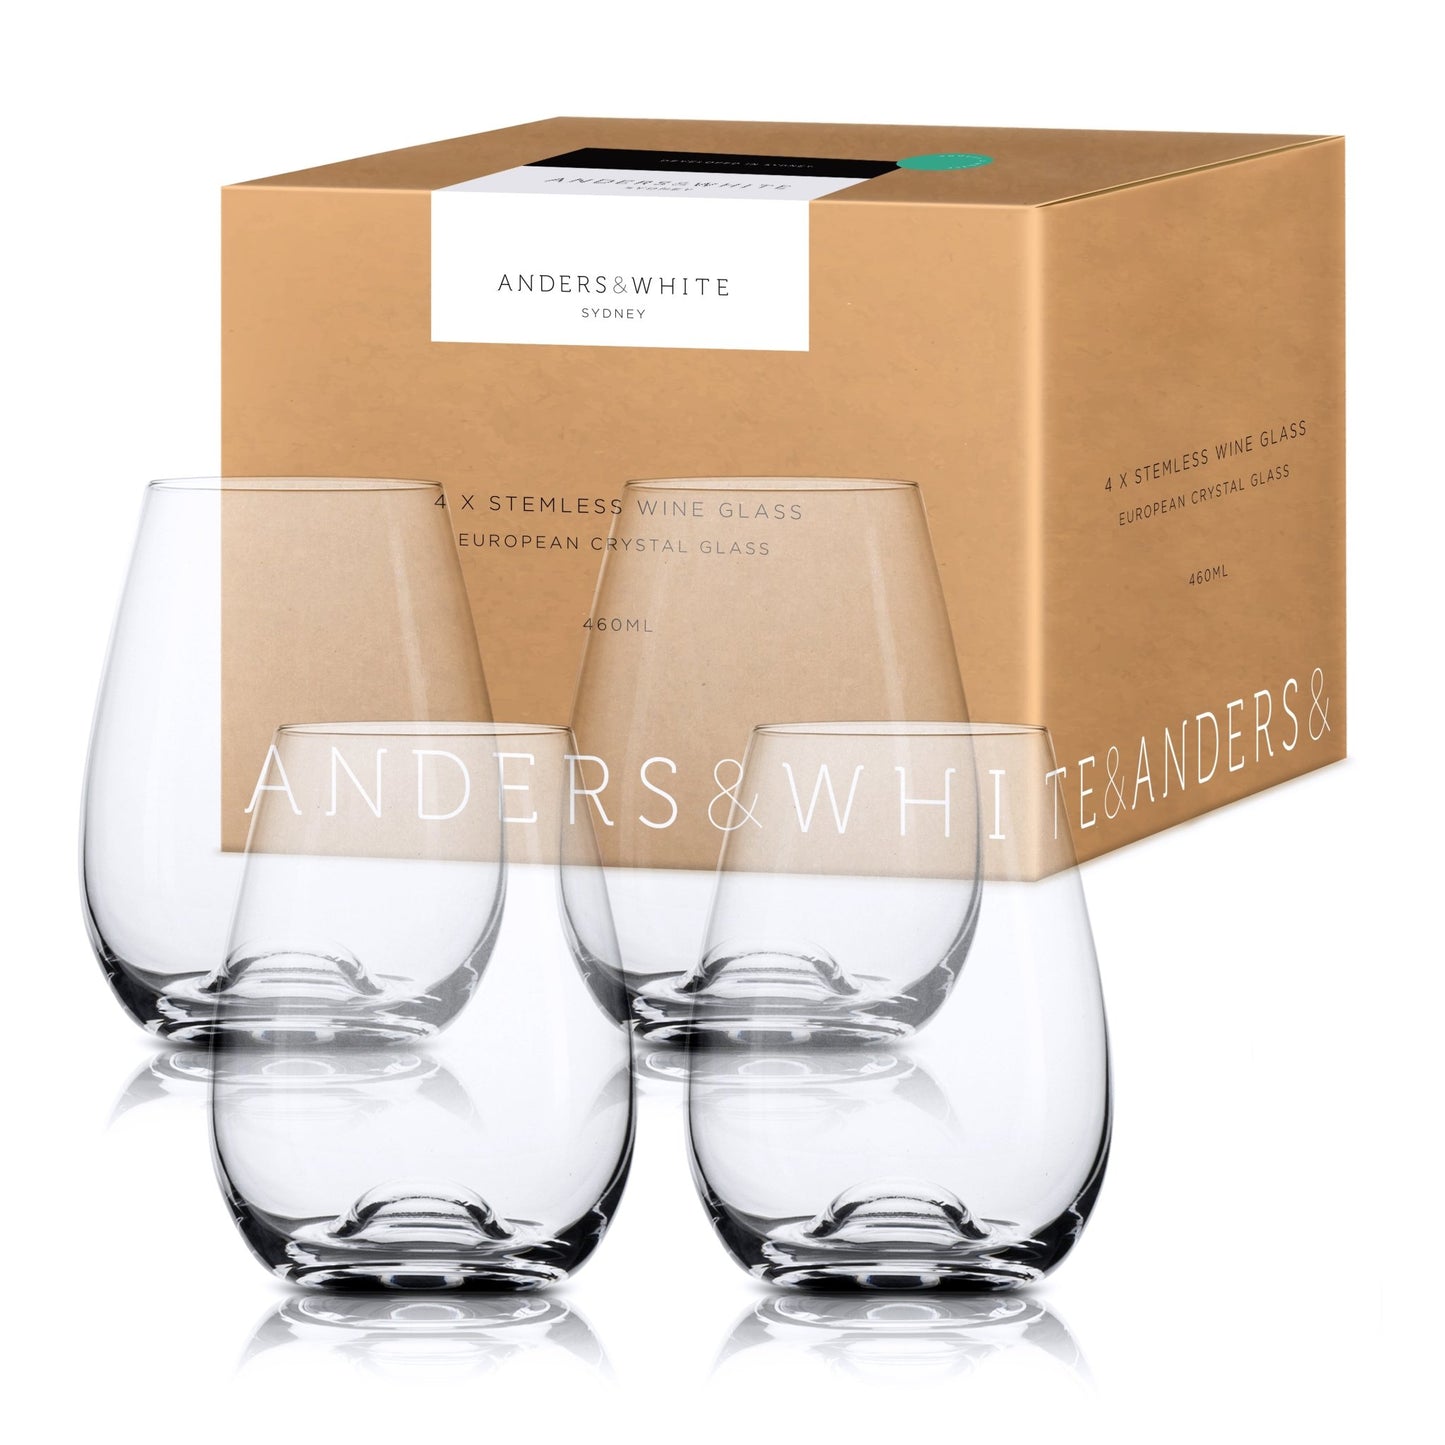 Stemless Crystal Wine Glasses. European. Lead Free. 'Hosking' (460ml) 4x Glasses - Anders & White